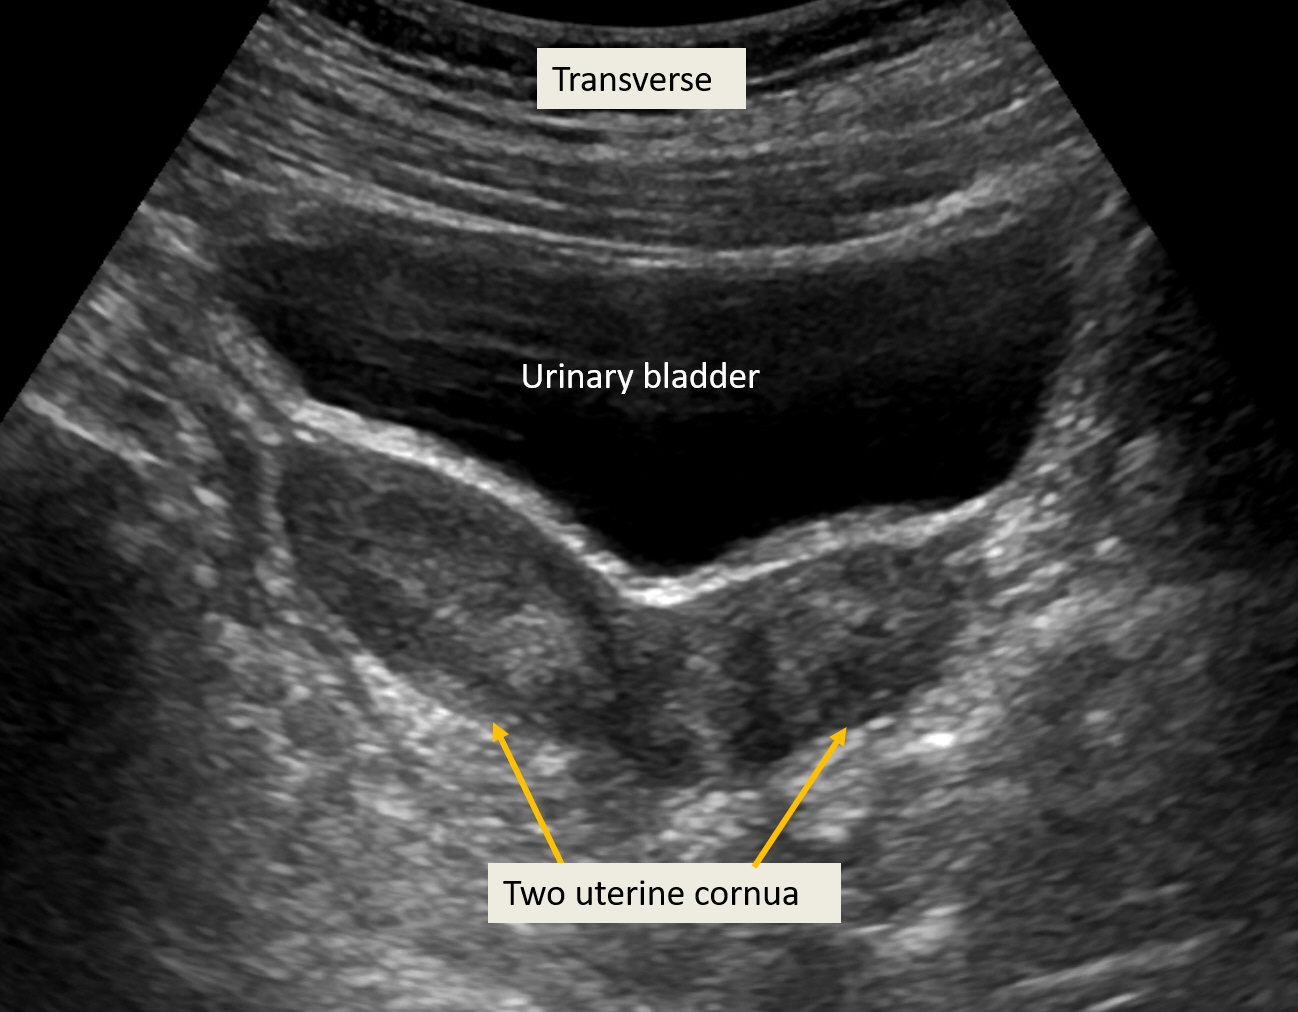 Transabdominal ultrasound of uterine didelphys: 2 uterine cornua are visible in transverse sections.